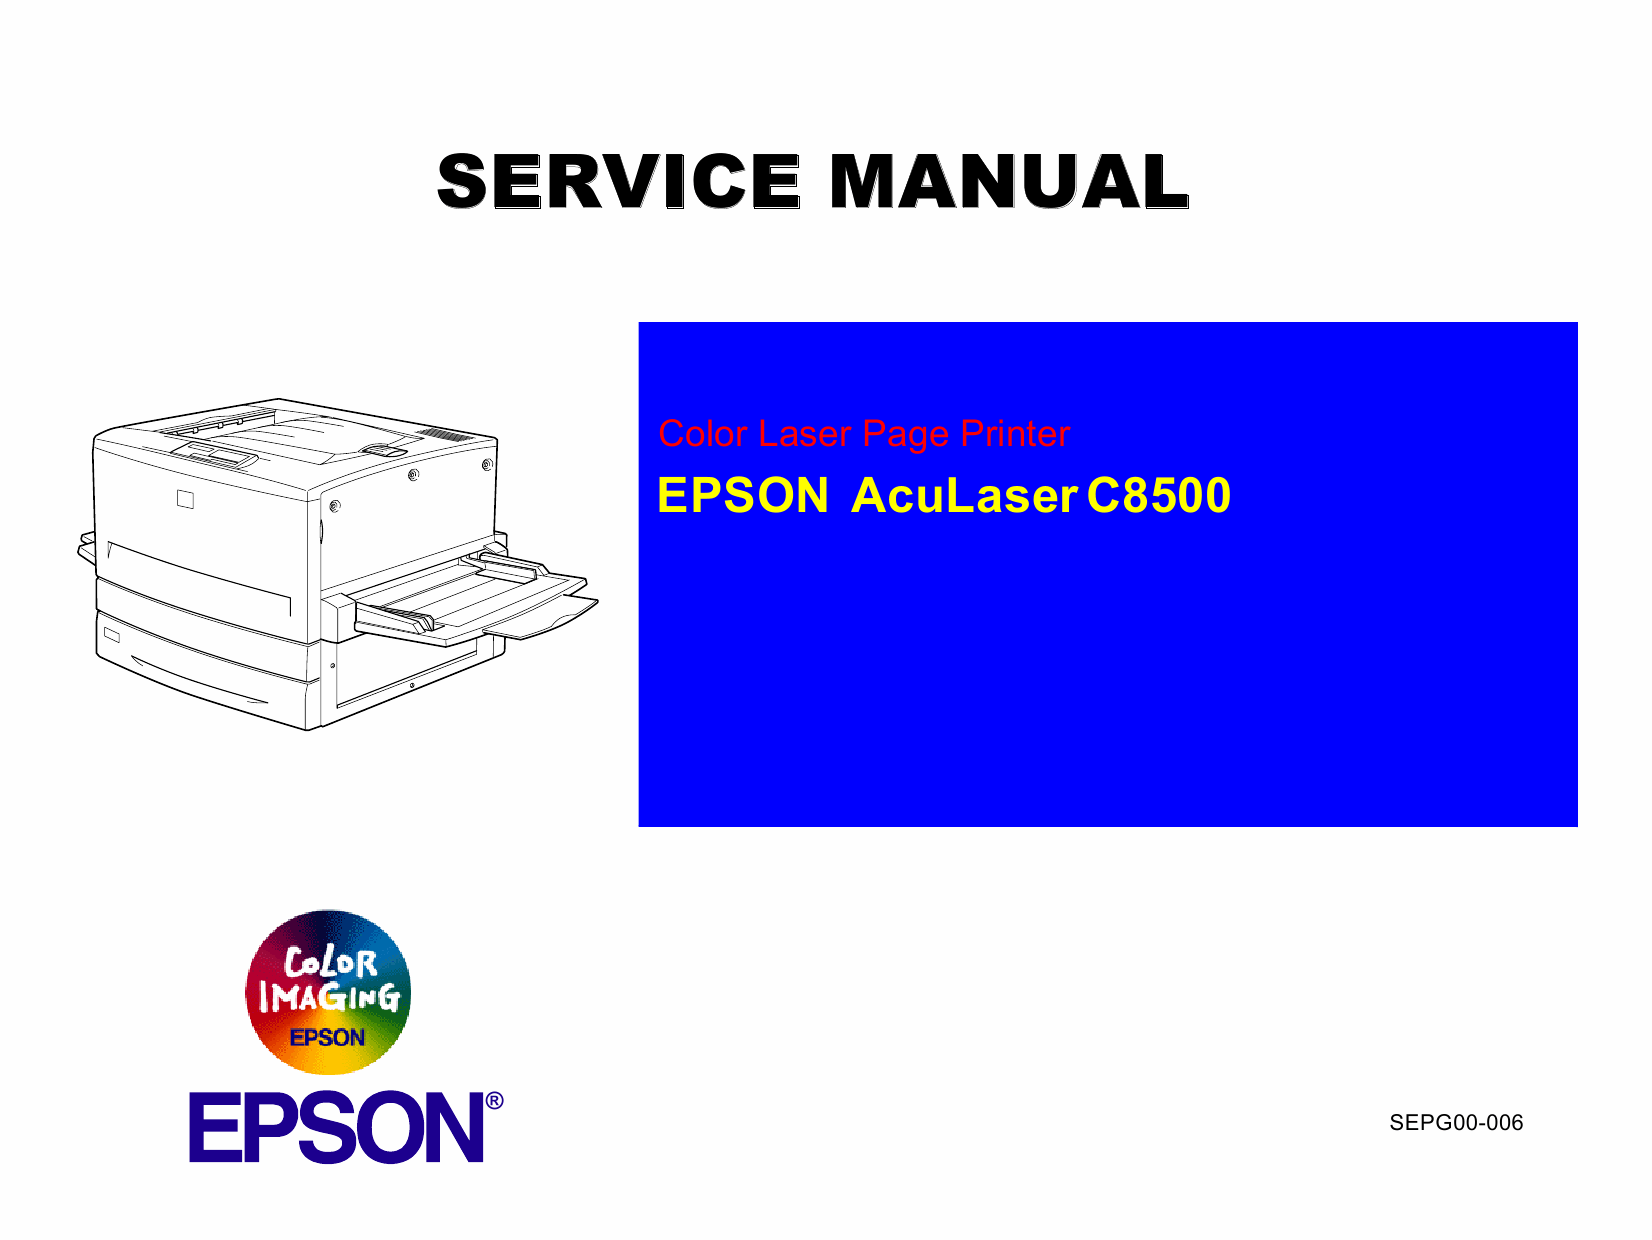 EPSON AcuLaser C8500 Service Manual-1